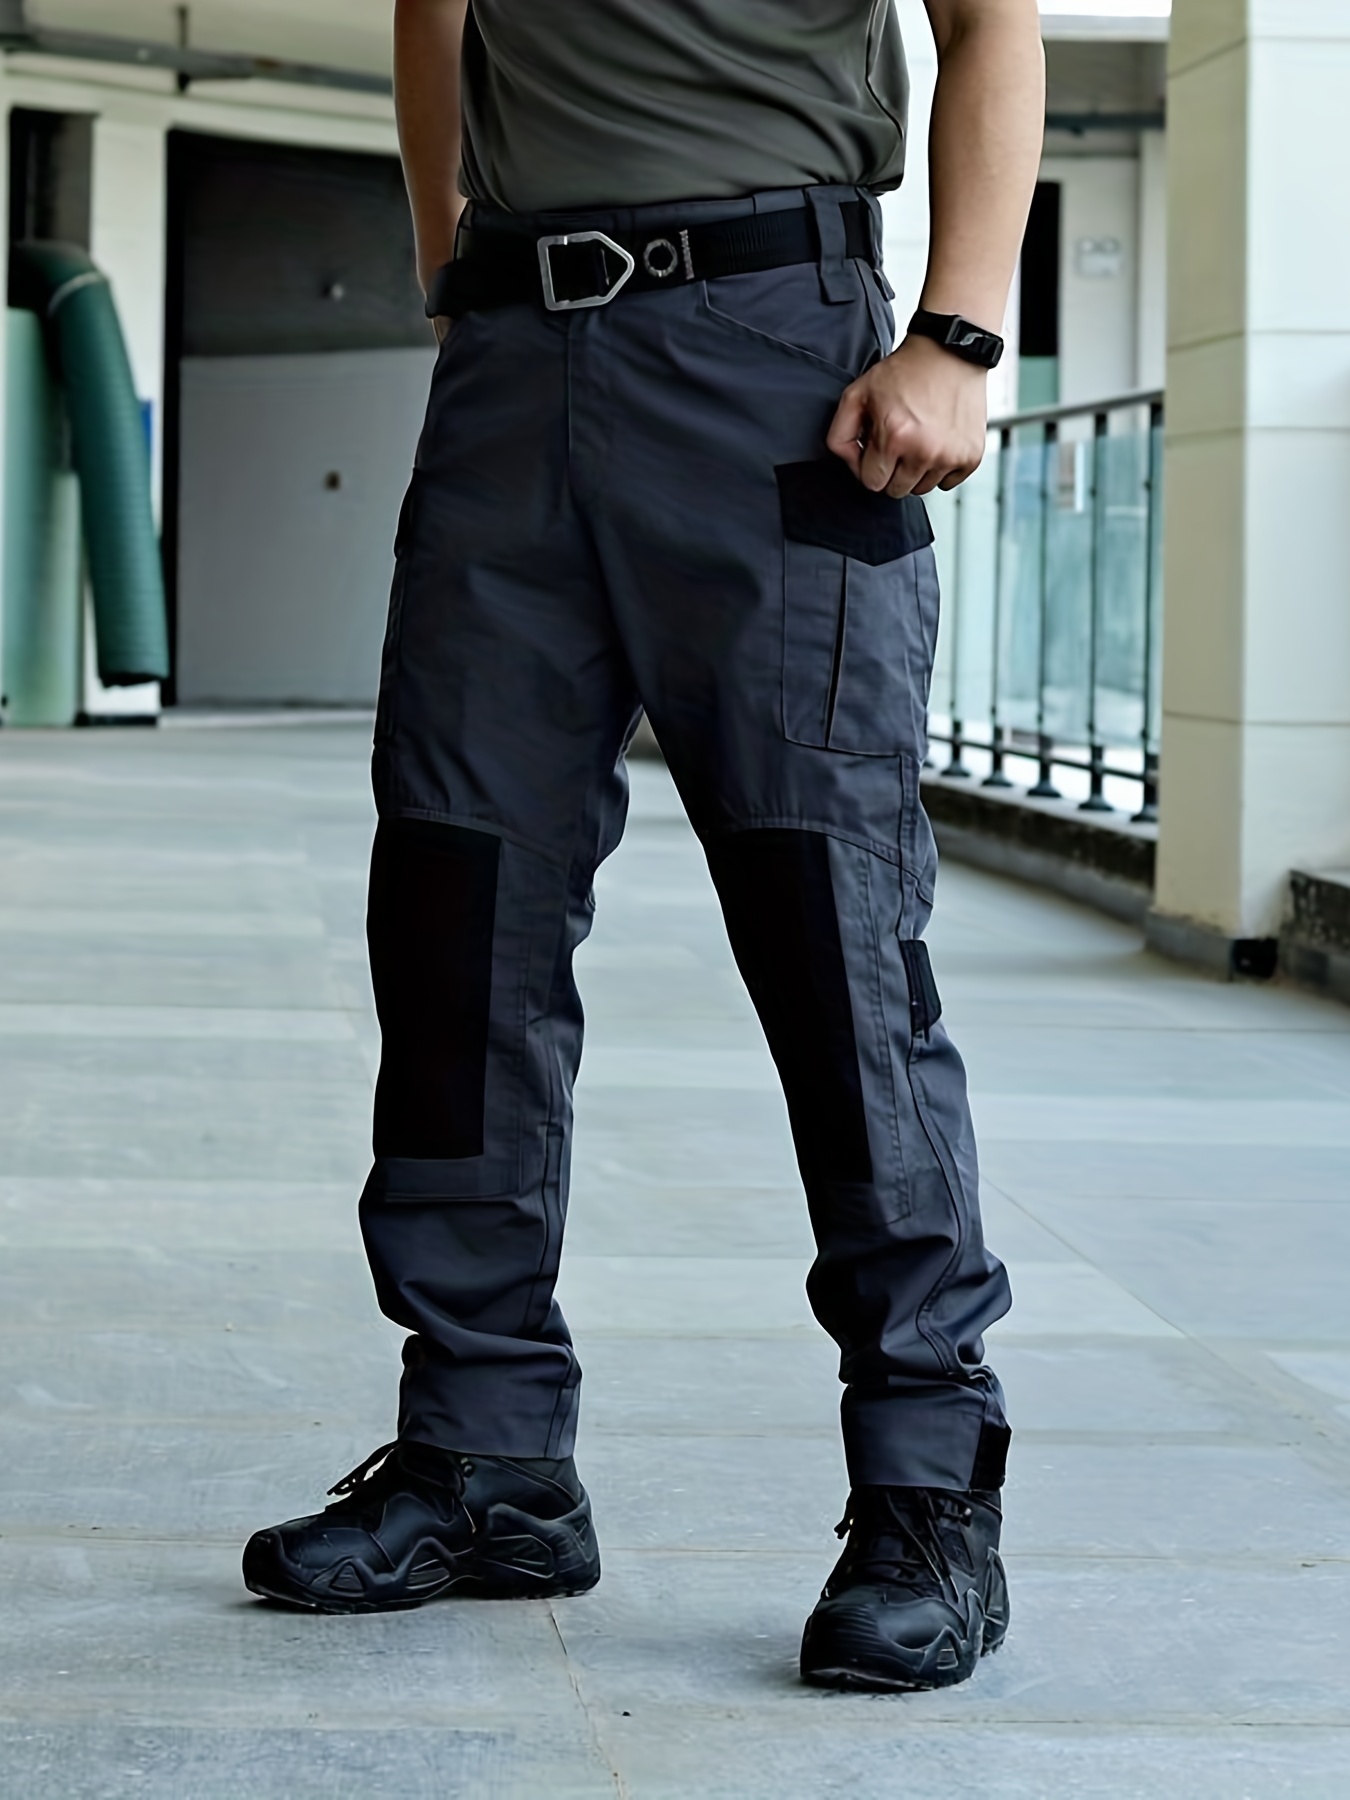 kpoplk Sweatpants For Men,Men's Baggy Harem Pants with Drawstring, Paisley  Printed Jogger Pants Fashion Streetwear(Black,M) - Walmart.com